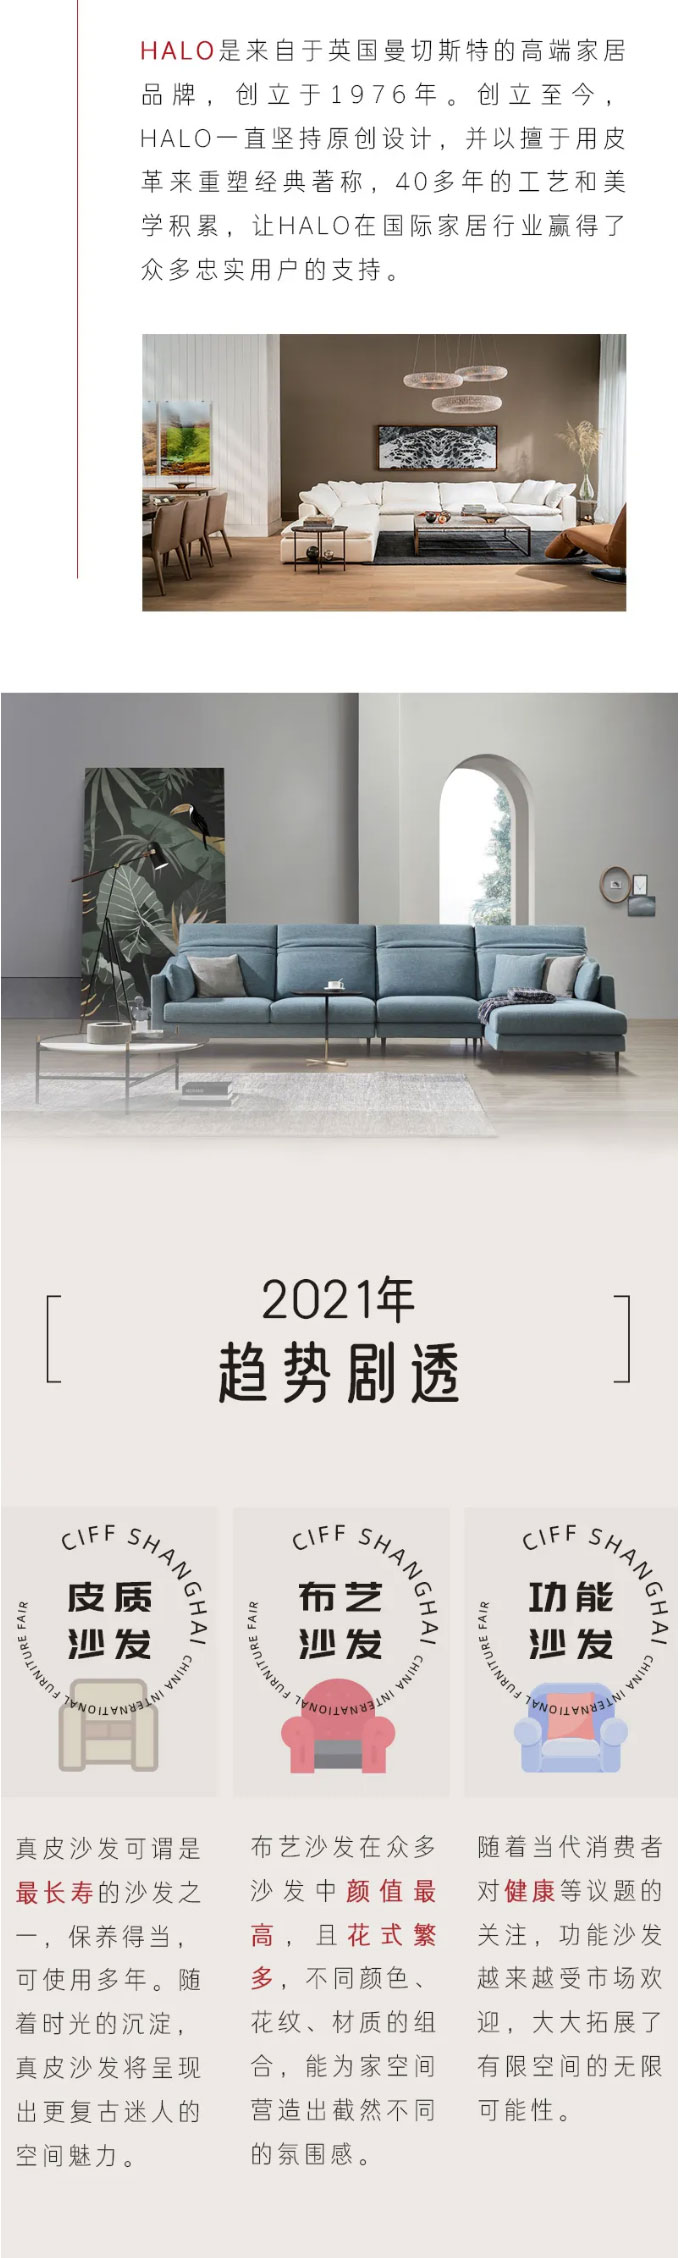 CIFF上海虹桥--超强品牌矩阵，带你领略软体沙发的非凡美学！_05.jpg